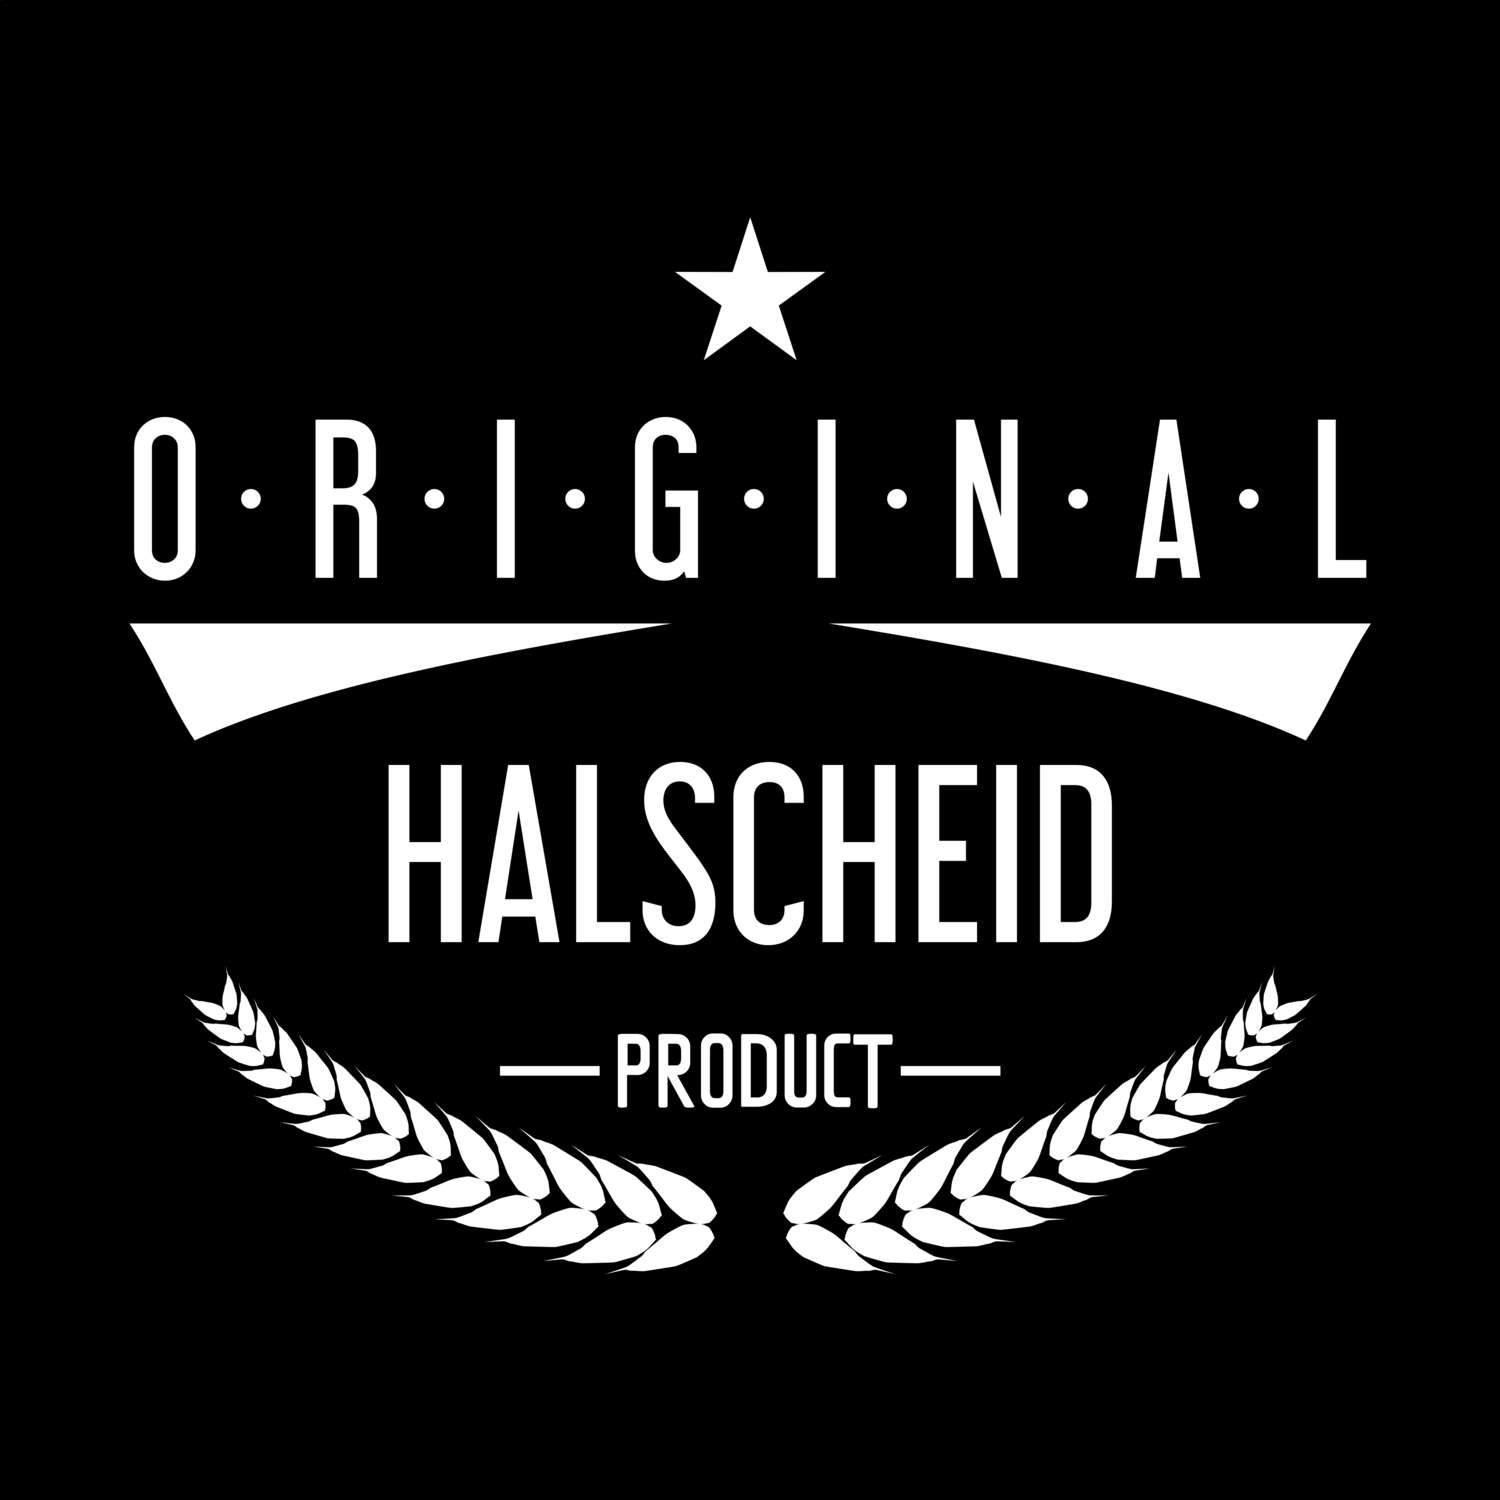 Halscheid T-Shirt »Original Product«